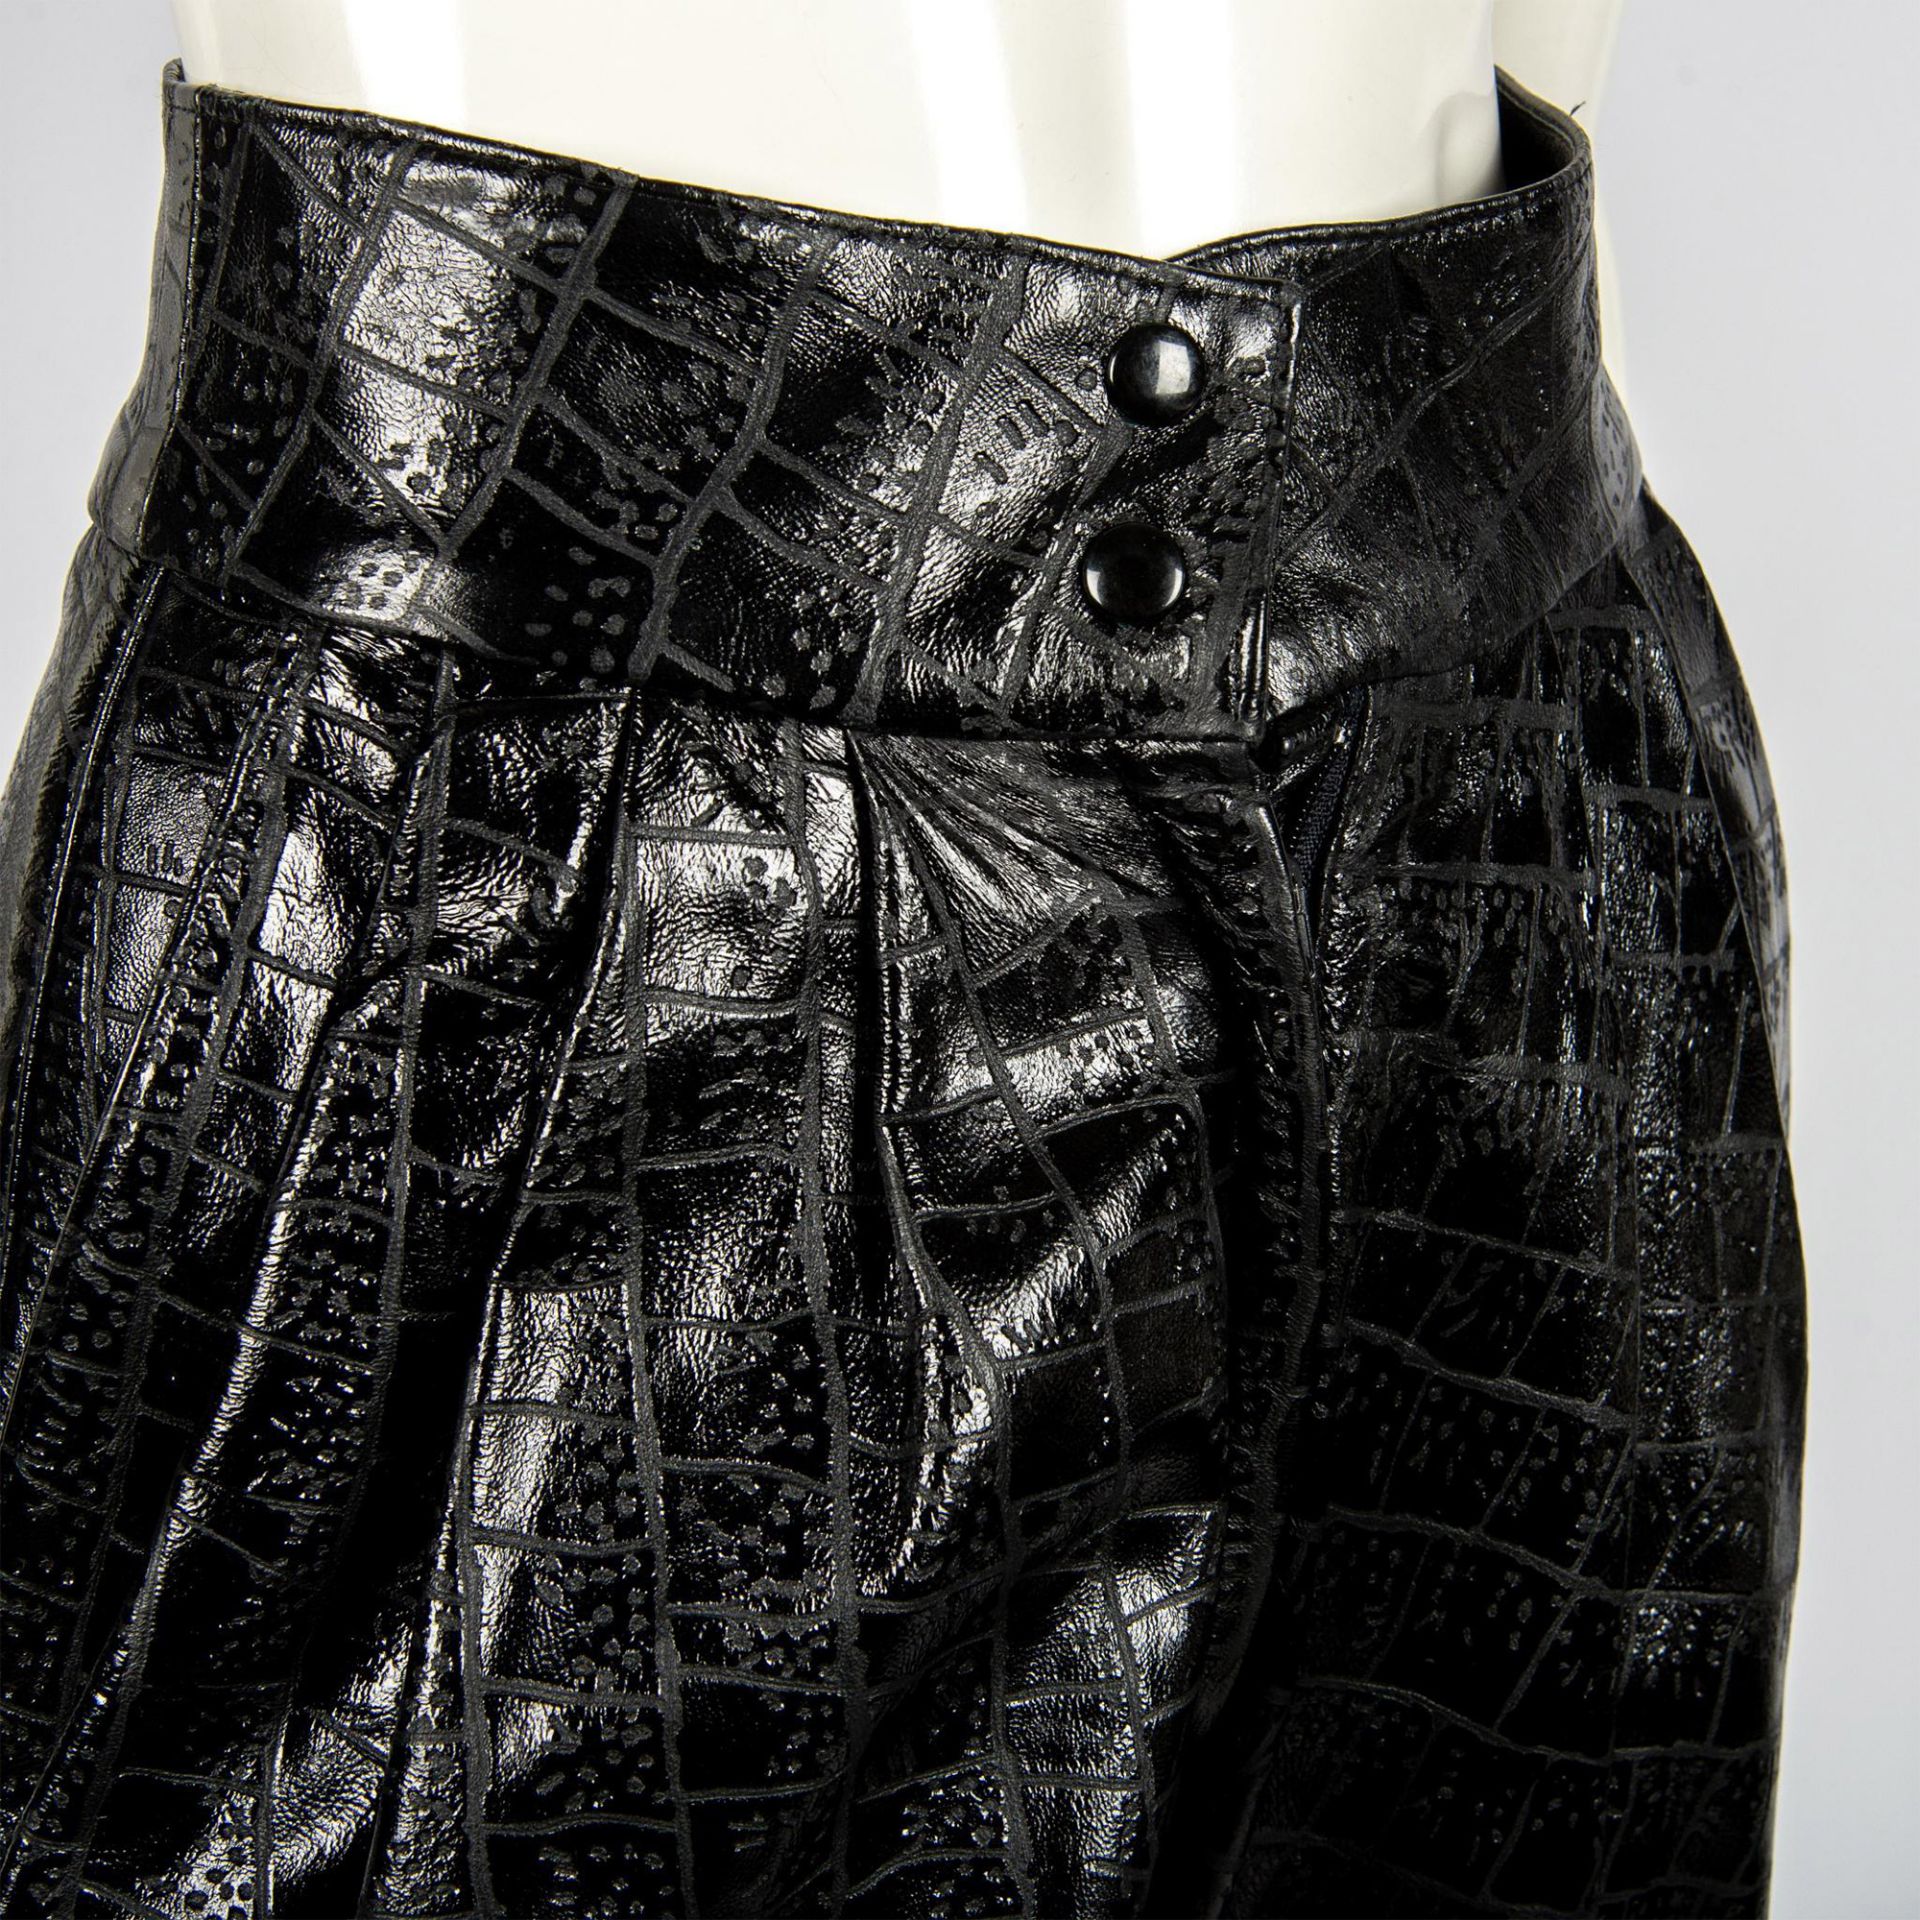 Vintage Lillie Rubin Black Leather High Wasted Pants, Size 2 - Image 2 of 4